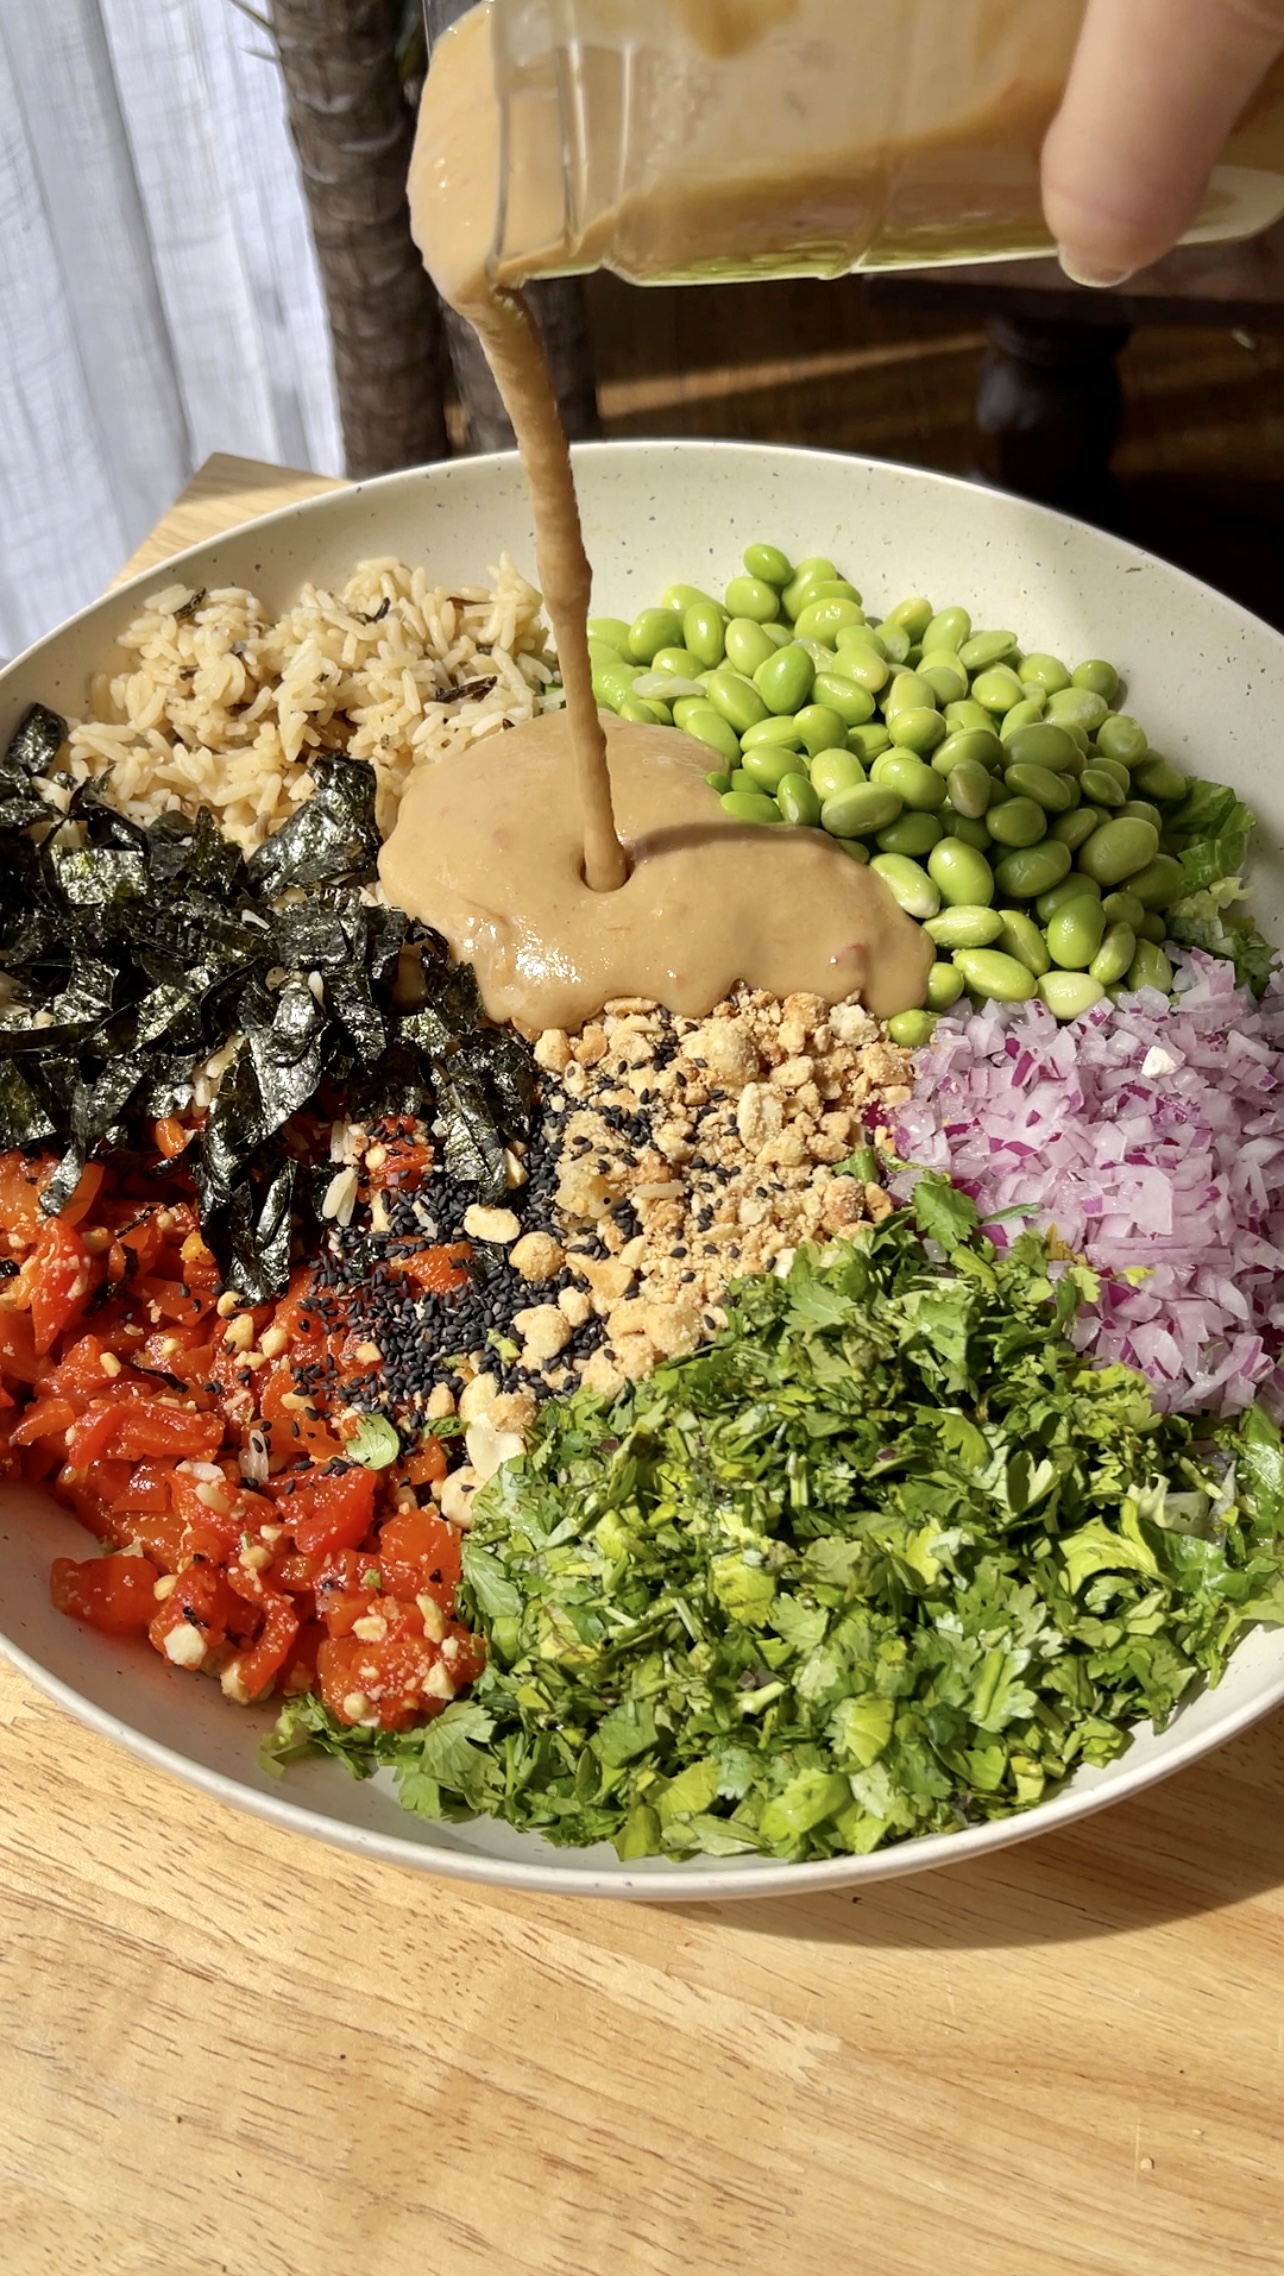 Gut Health Salad Bowl Meal Prep Recipe